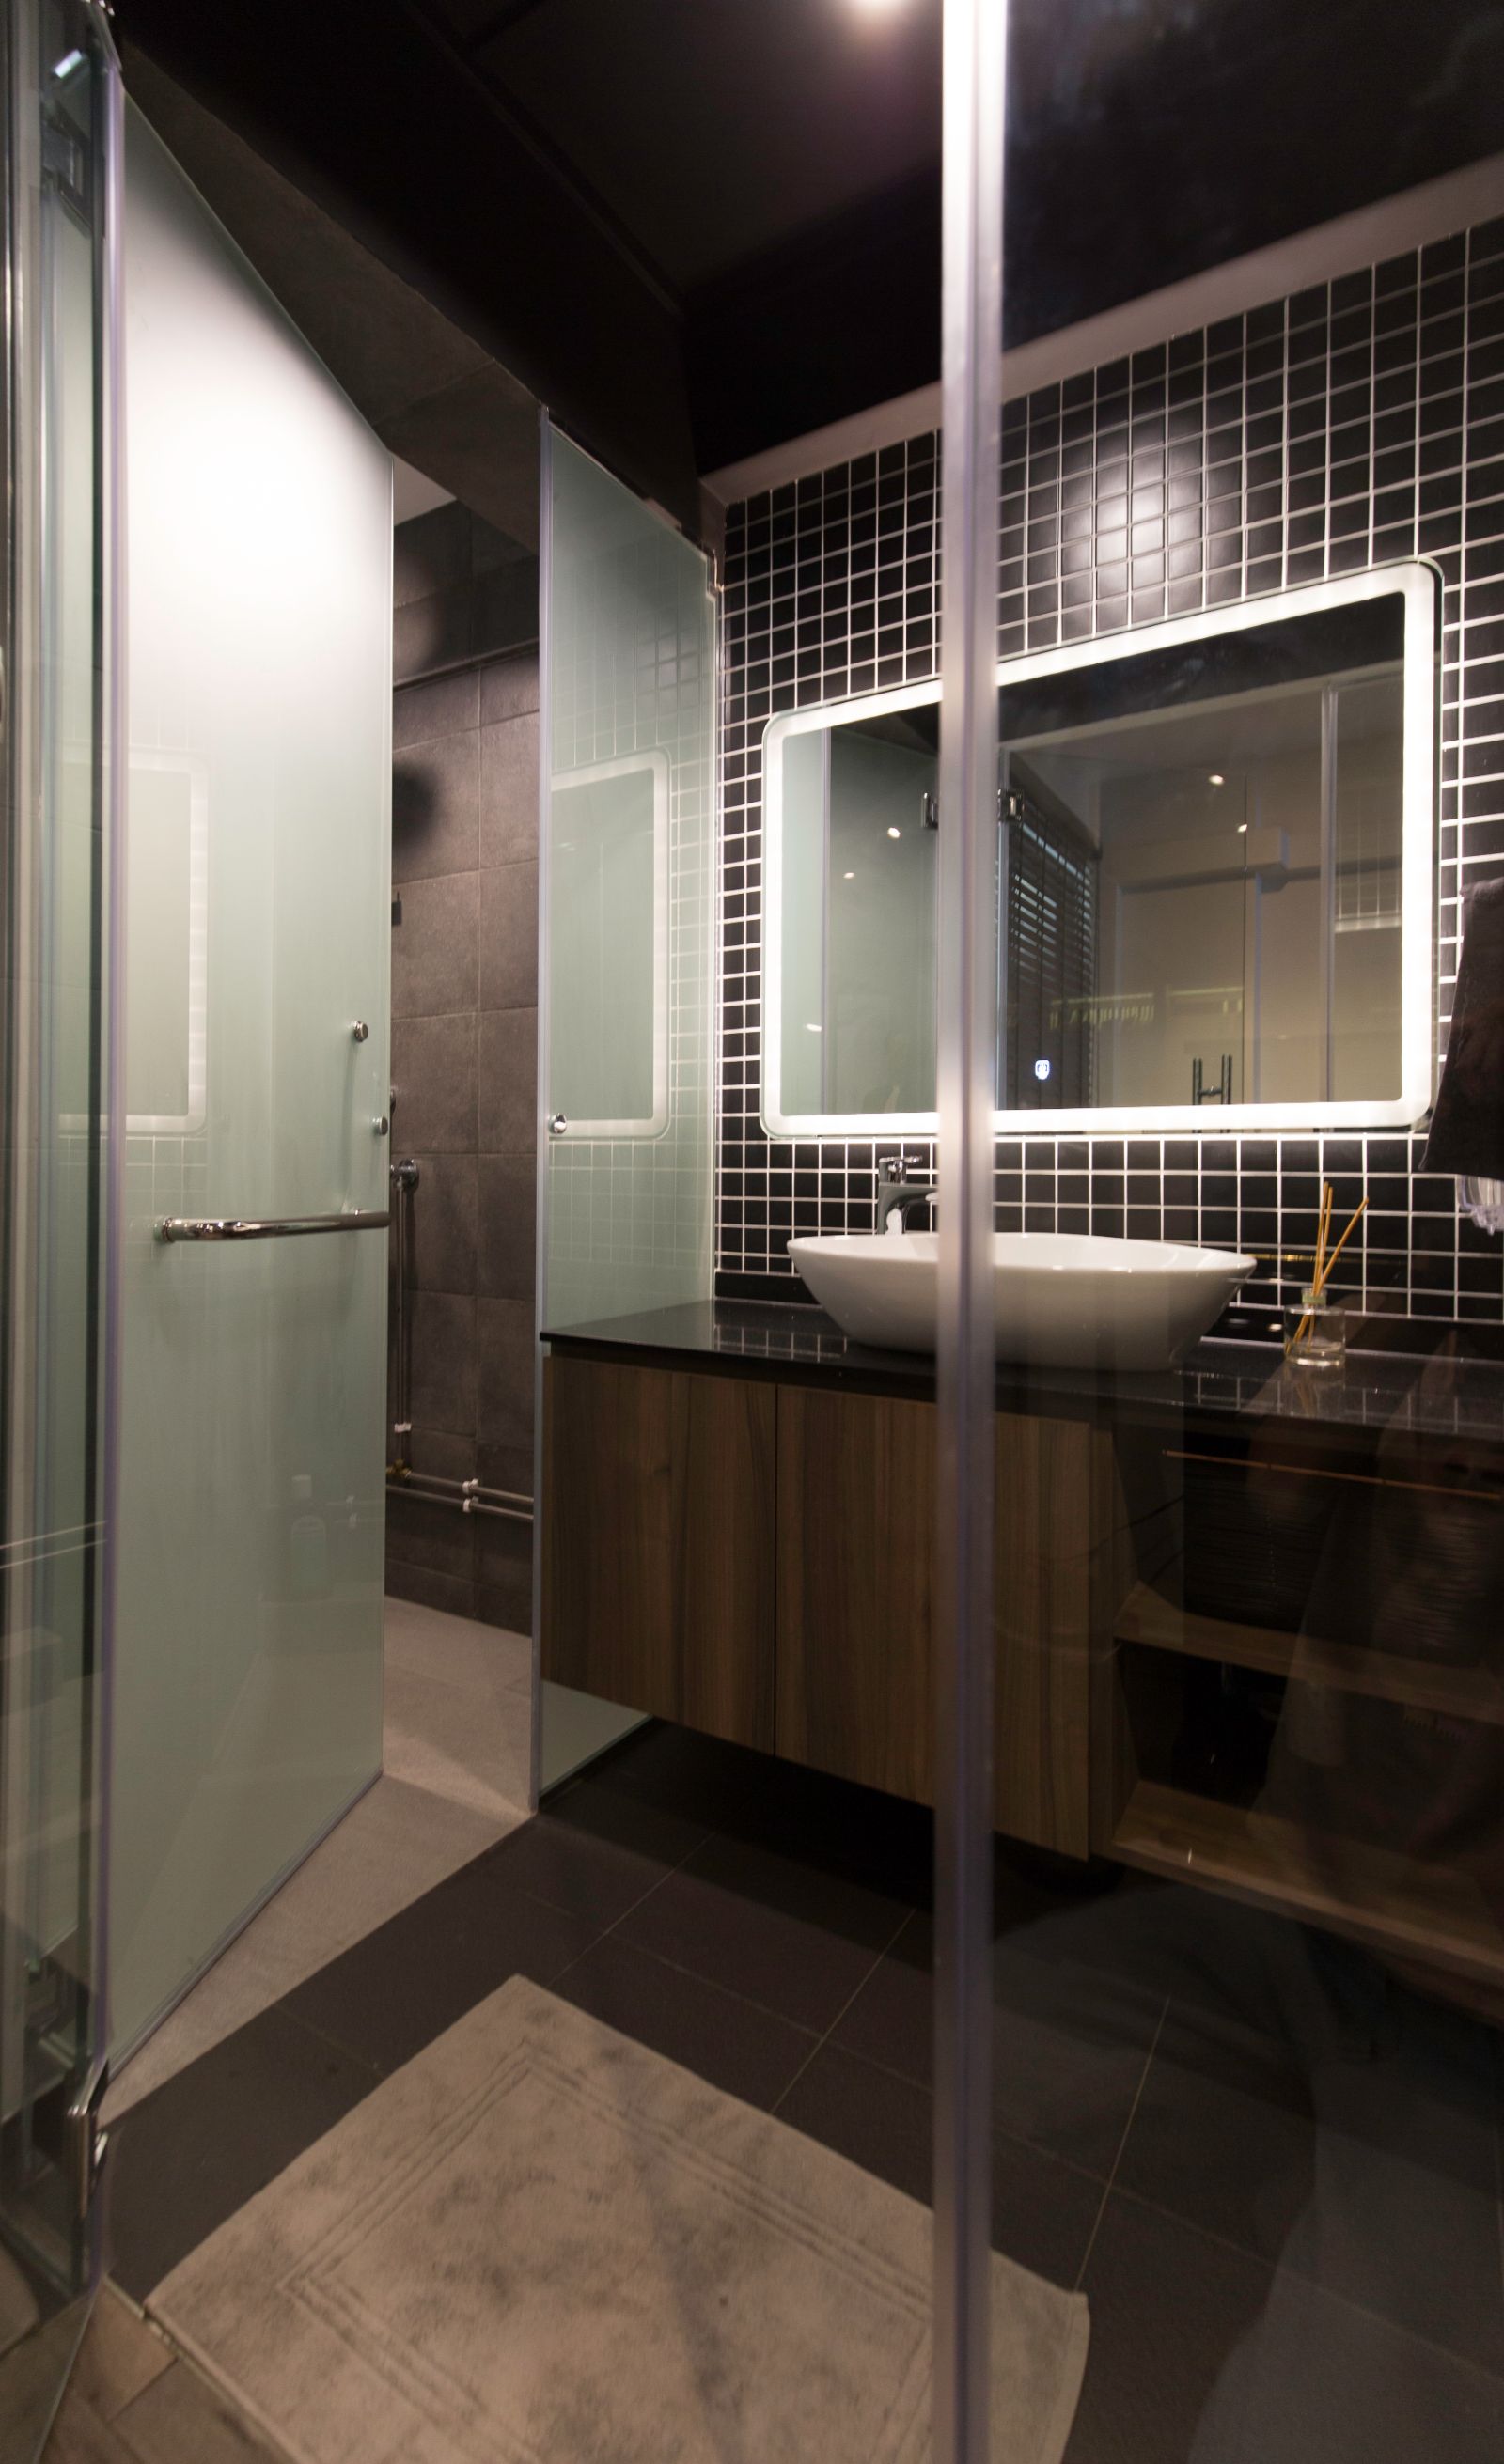 Eclectic, Industrial, Modern Design - Bathroom - HDB 3 Room - Design by PRDT Pte Ltd